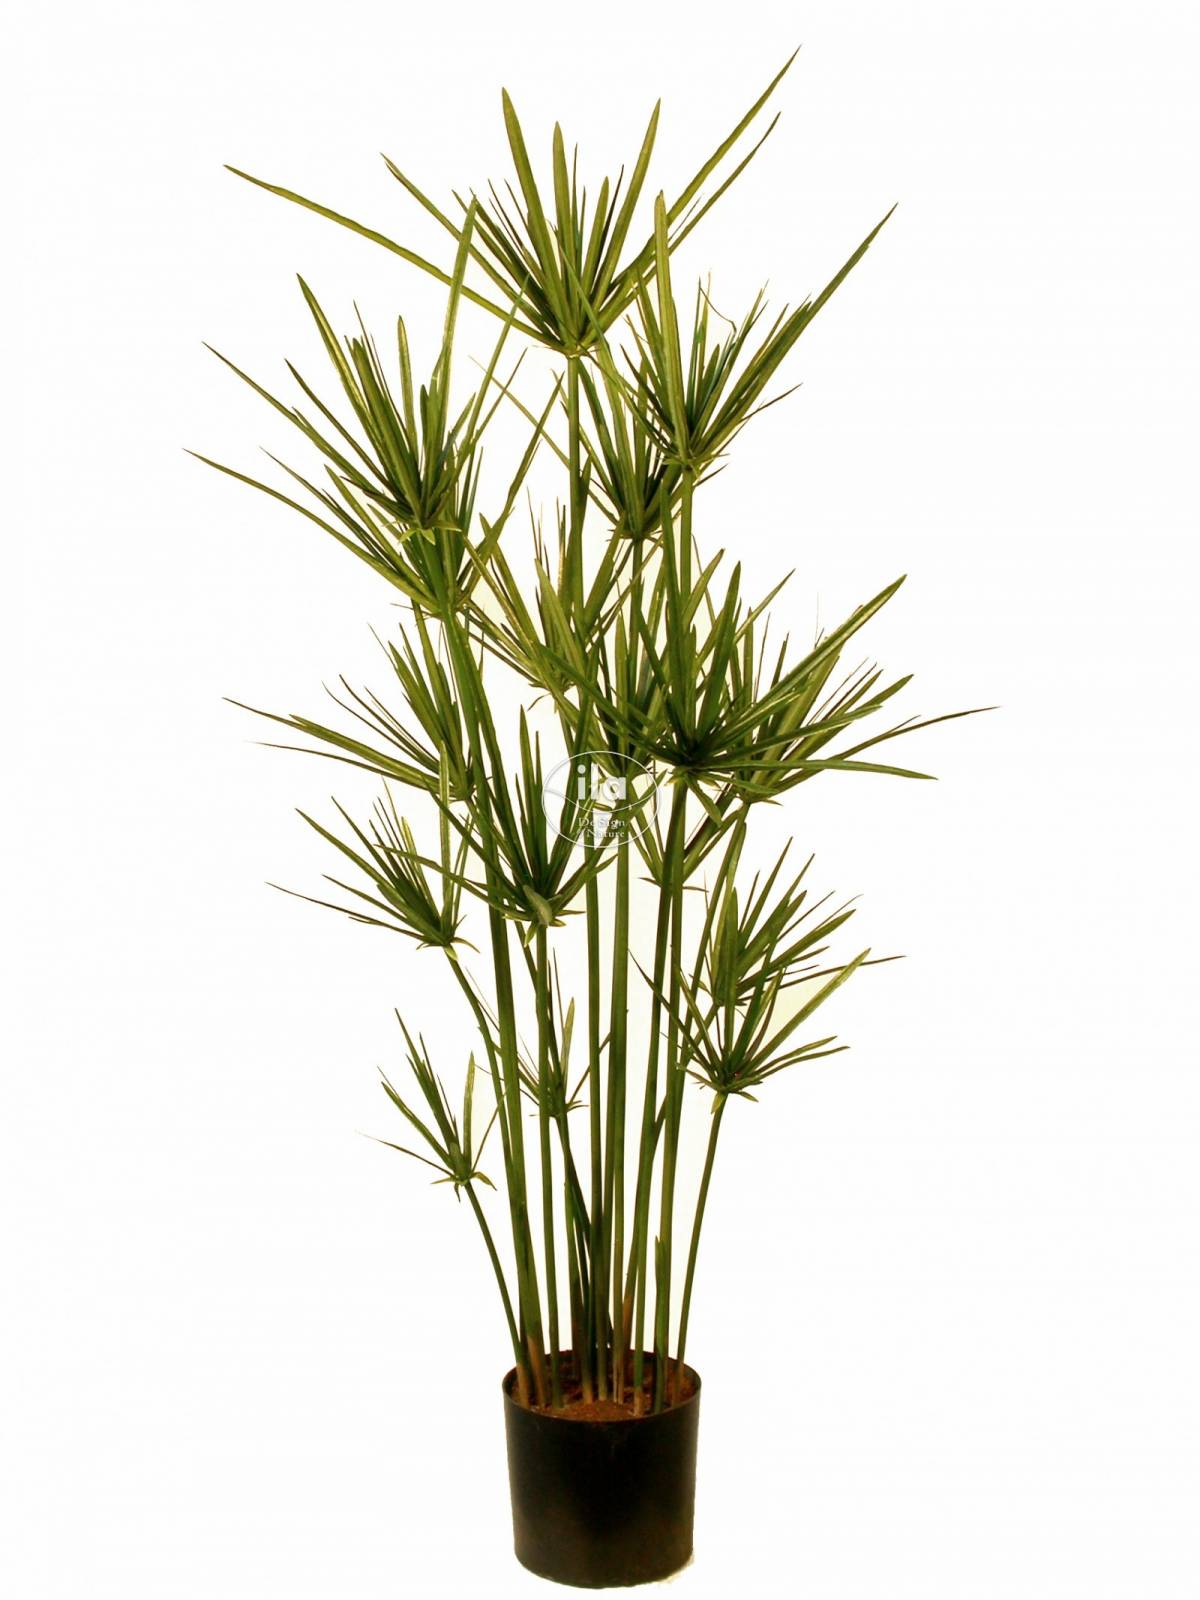 64253-papyrus-plant-90-cm-green-2-4-4293grn-1.jpg